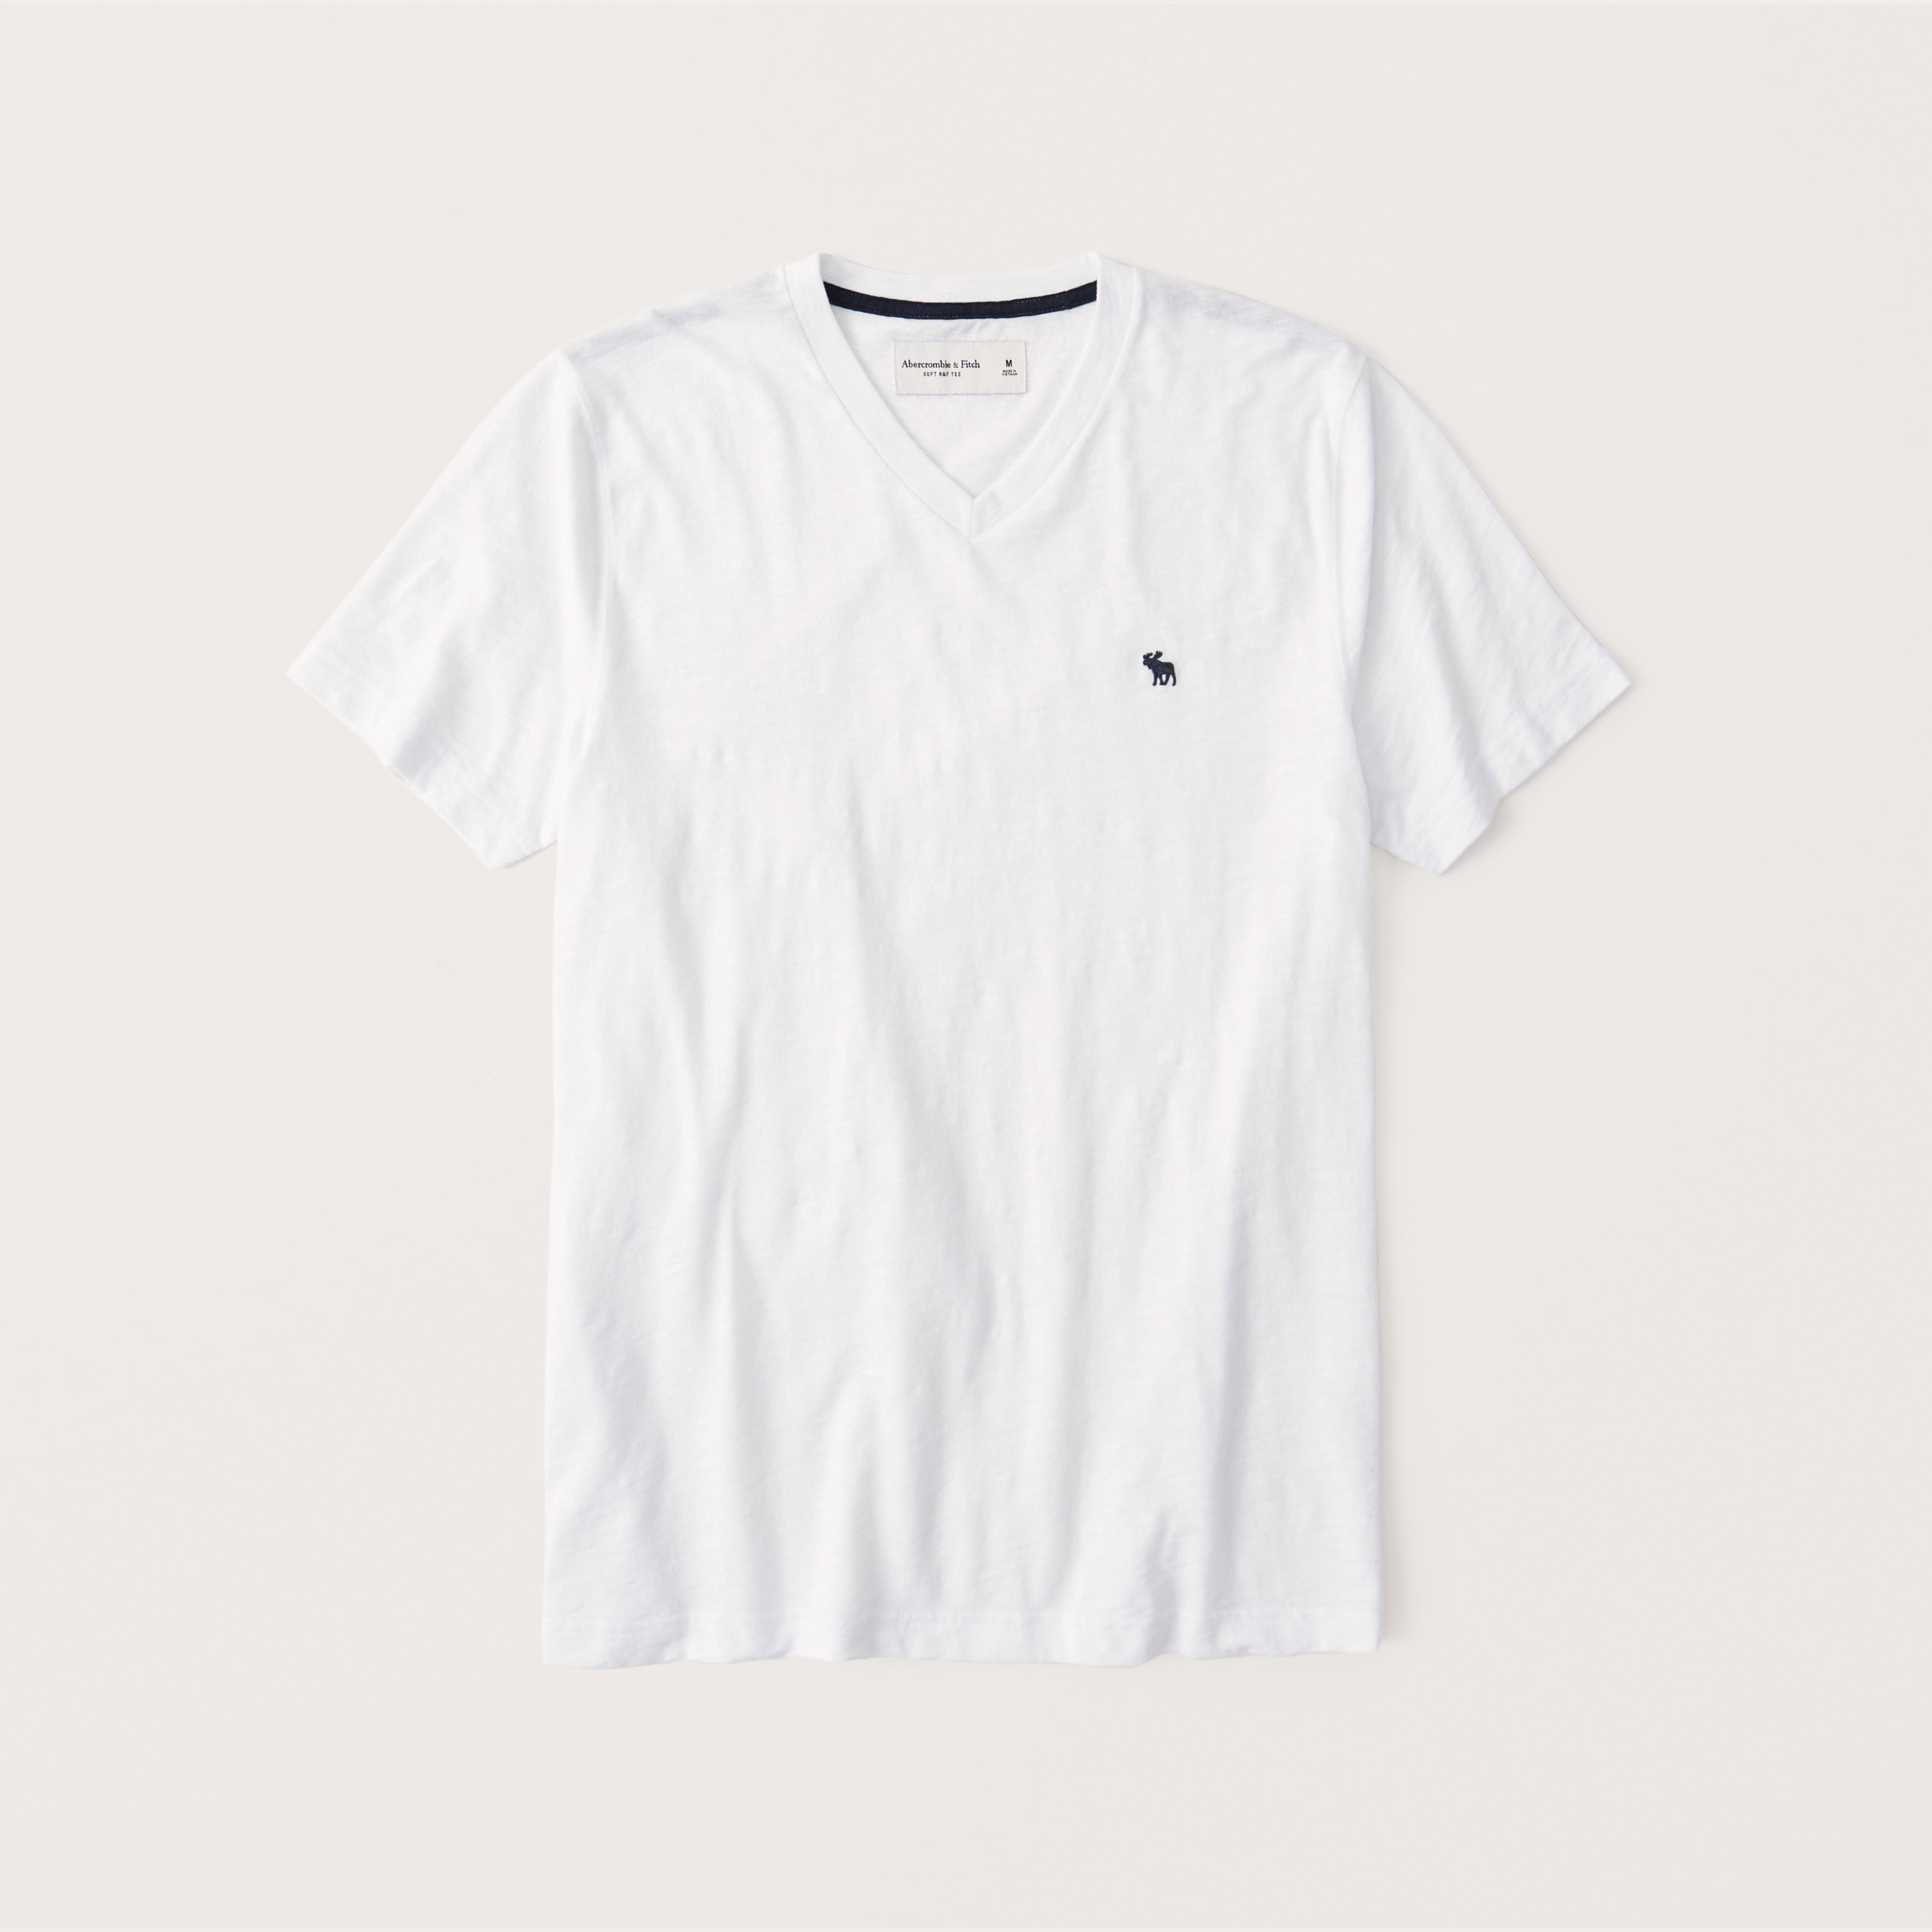 abercrombie white t shirt